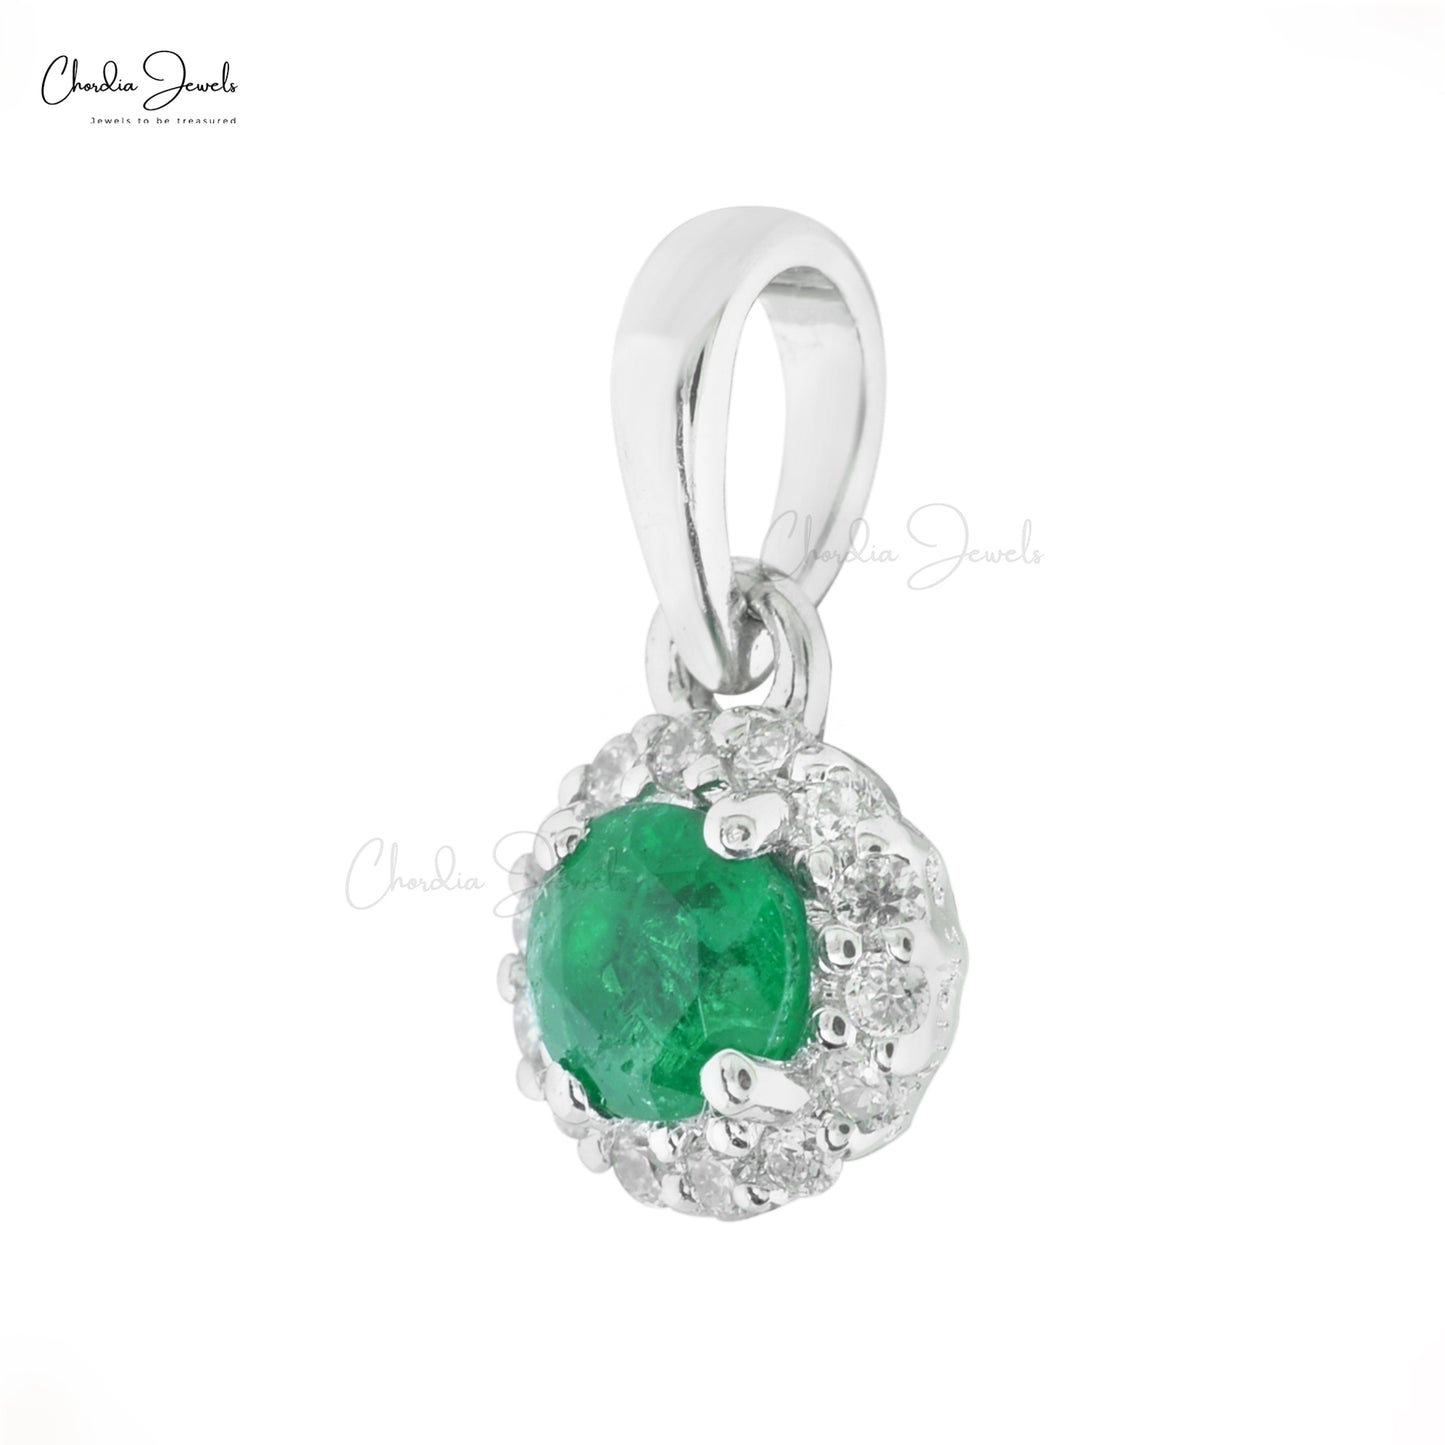 Authentic Emerald Diamond Halo Pendant Solid 14k White Gold 0.23ct Gemstone Pendant For Her